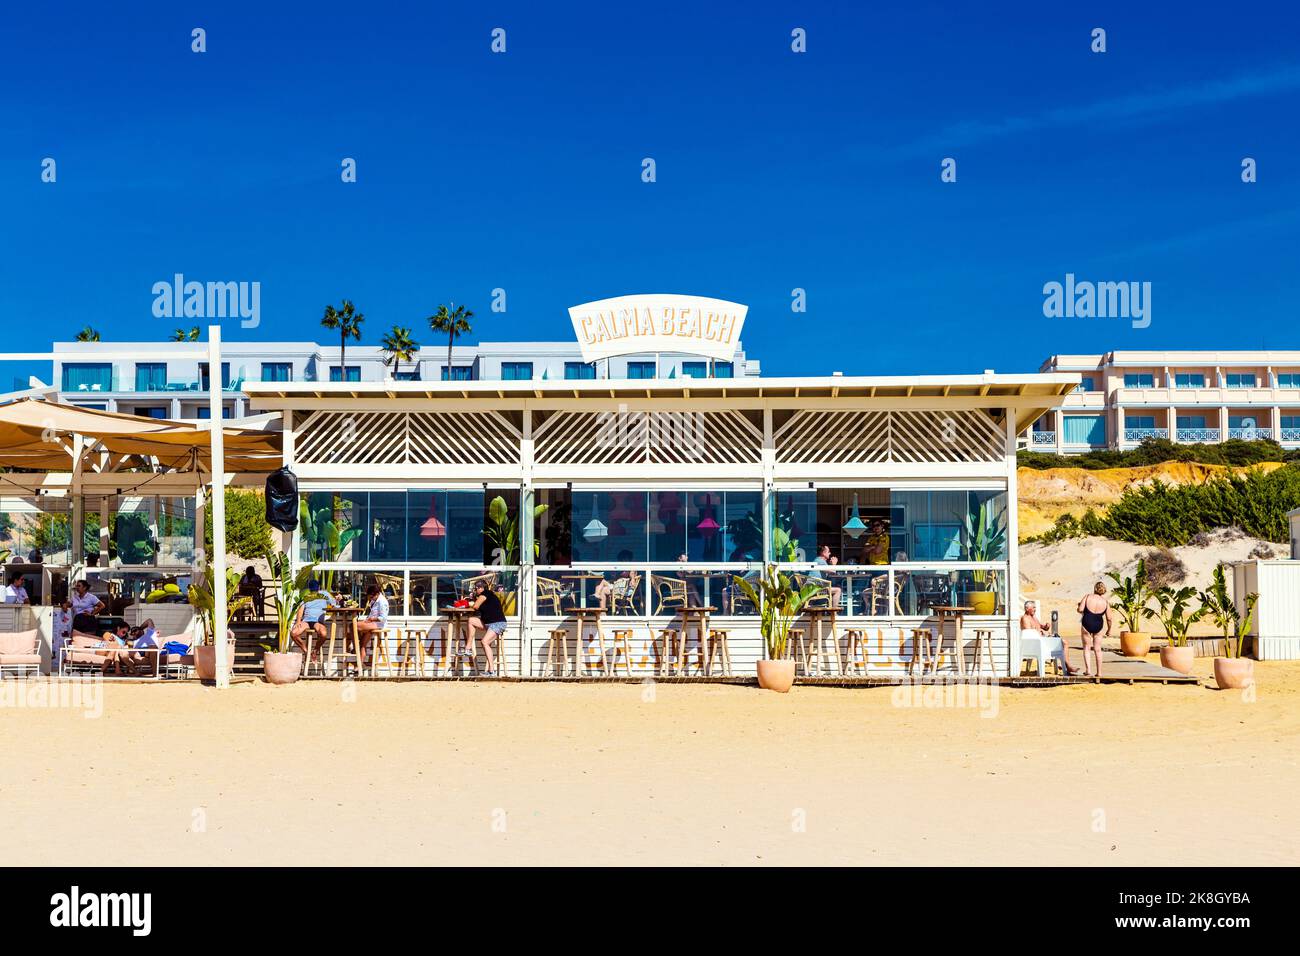 Calma Beach restaurant on Playa de la Barrosa, Cadiz, Spain Stock Photo